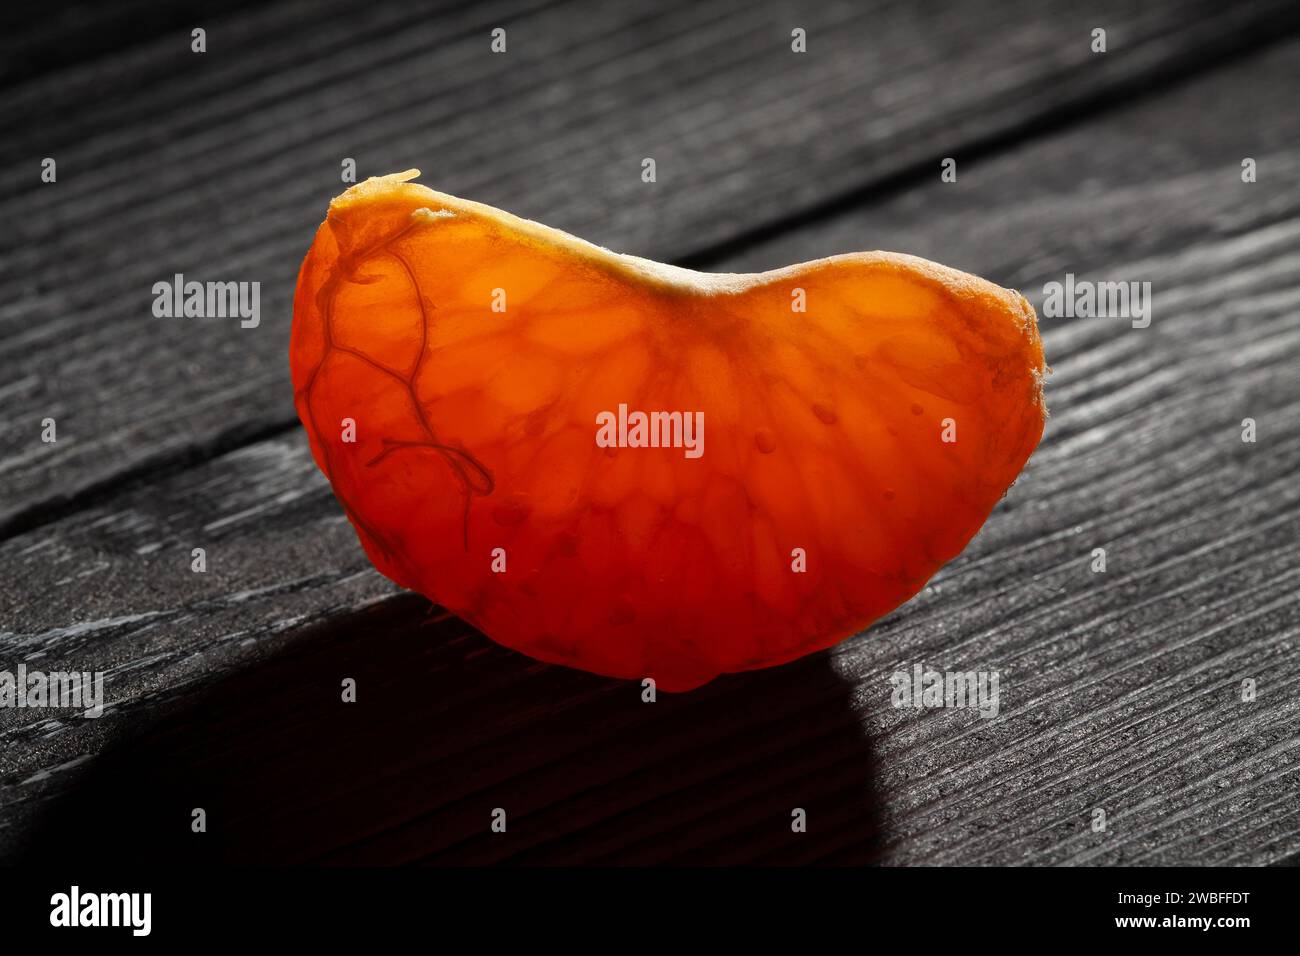 sliced tangerine on black wood background Stock Photo